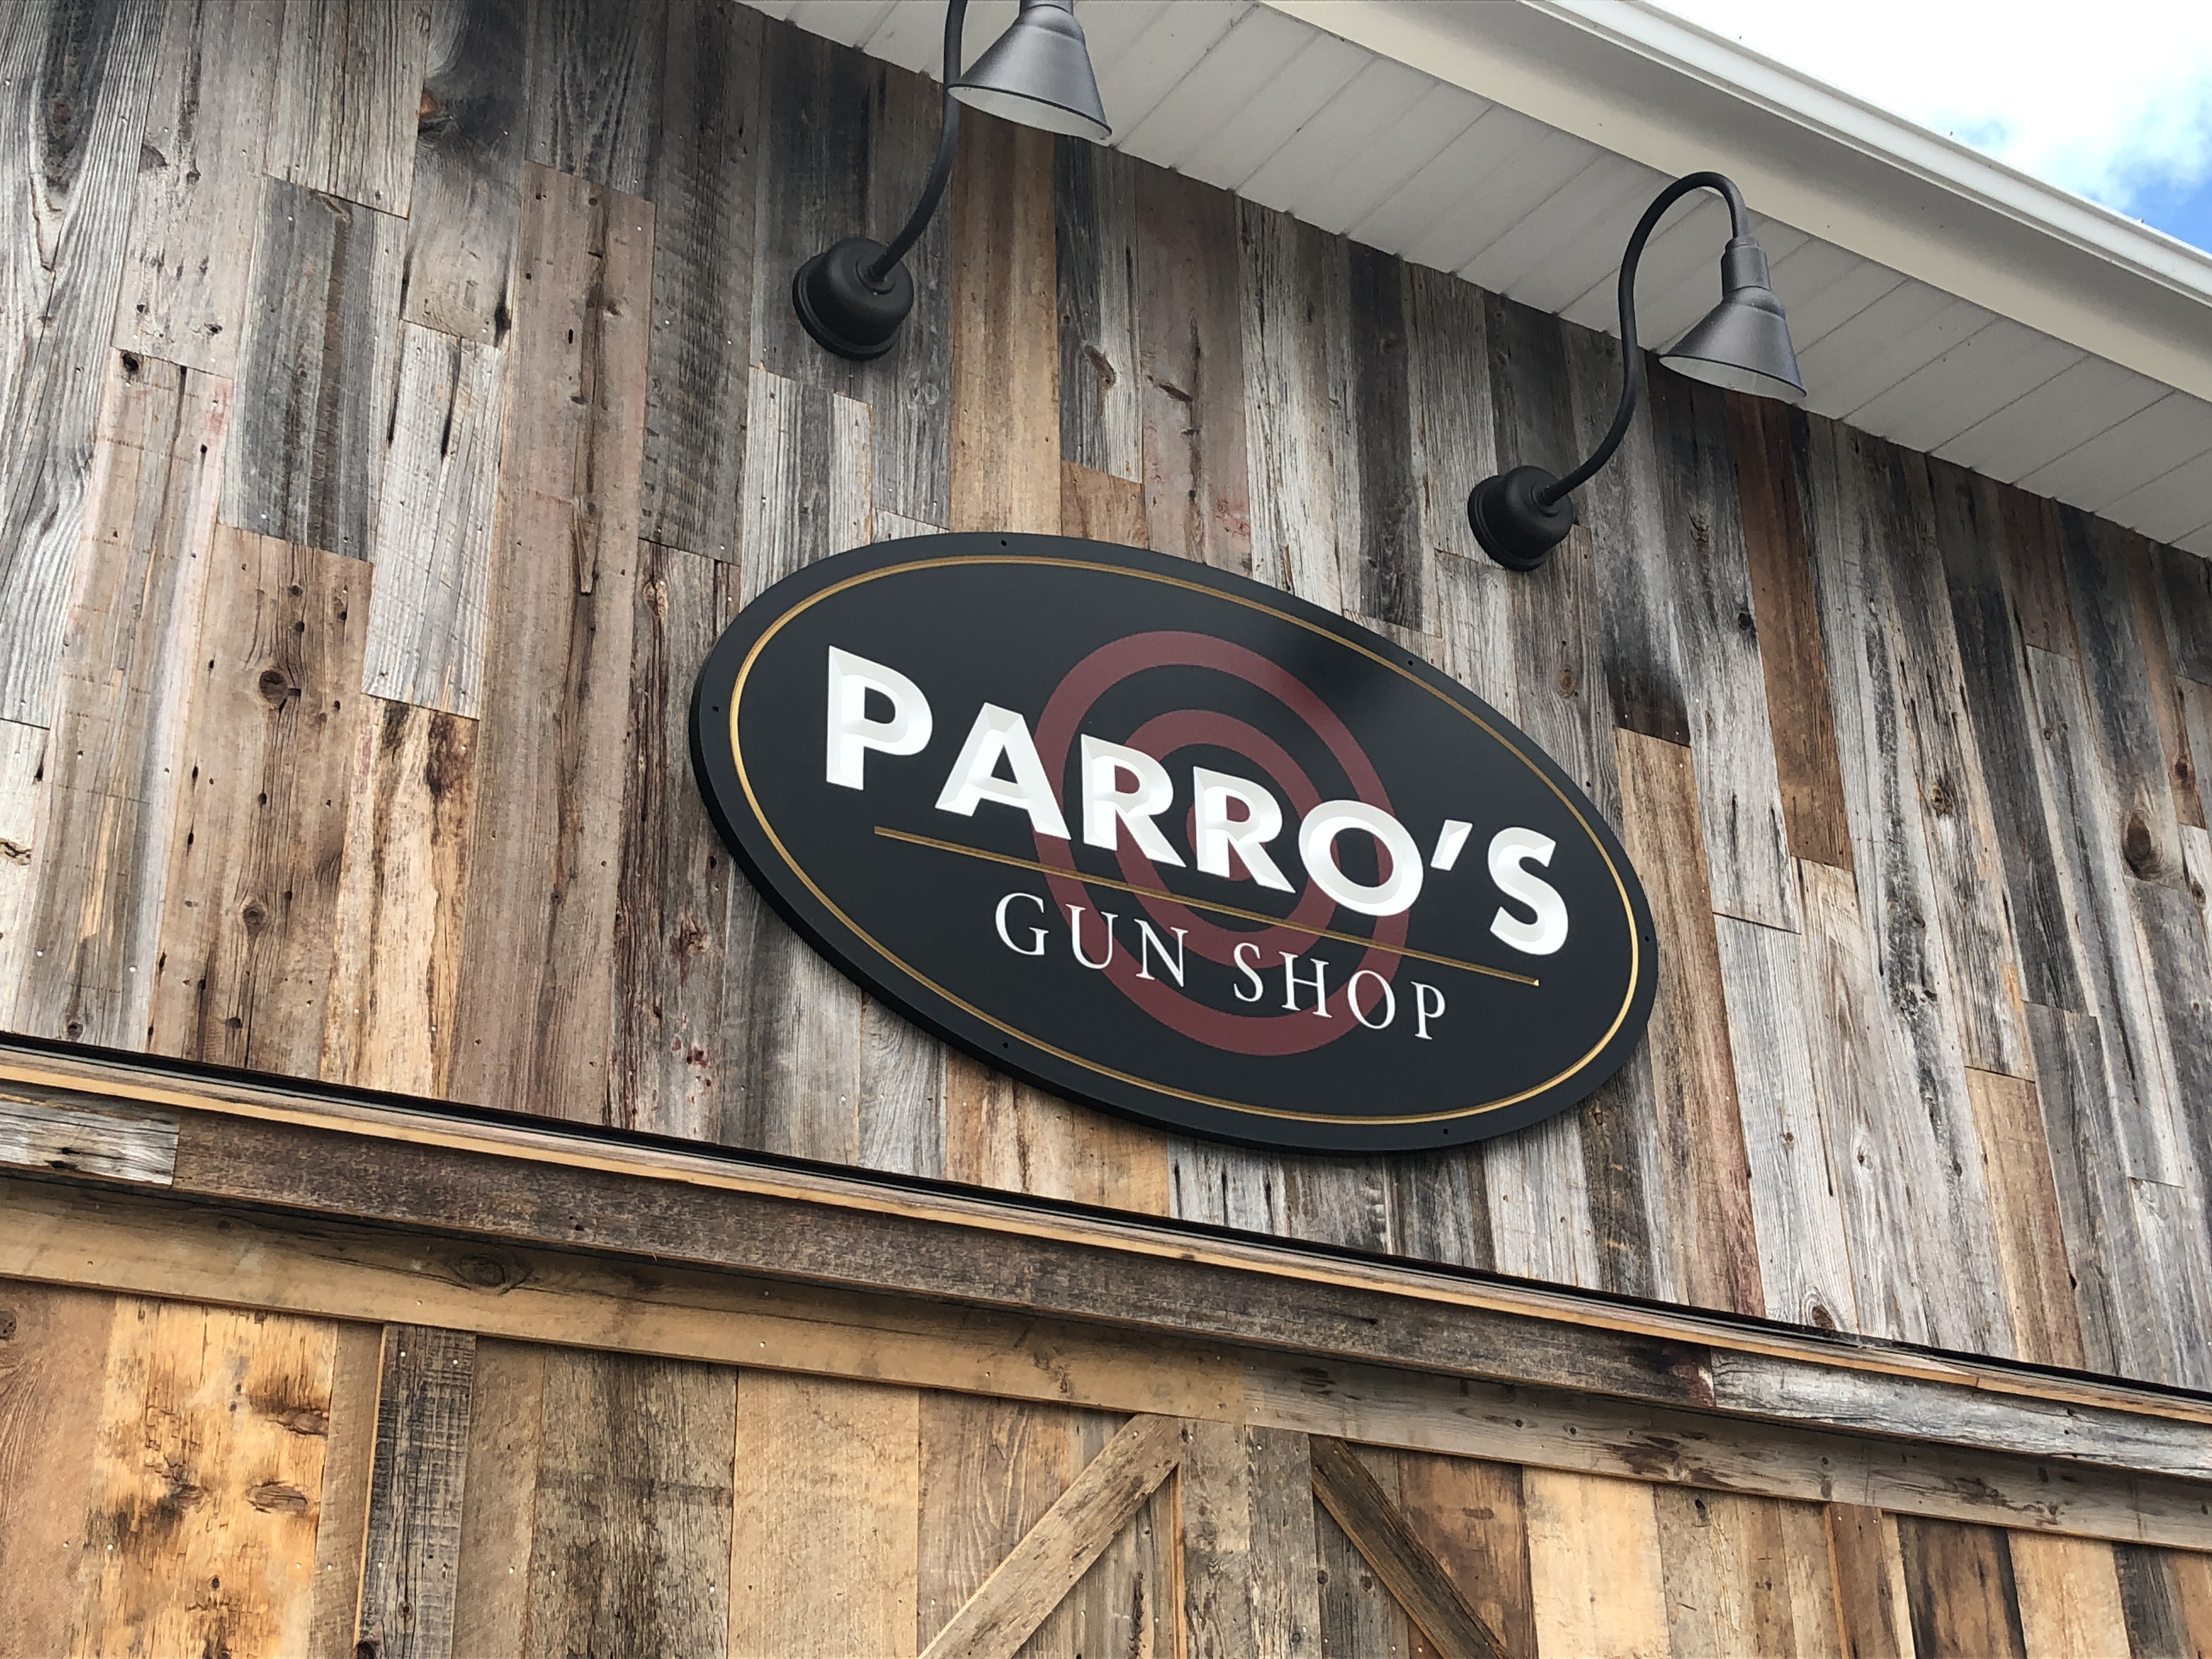 Parro's Gun Shop HDU Sign by Great Big Graphics